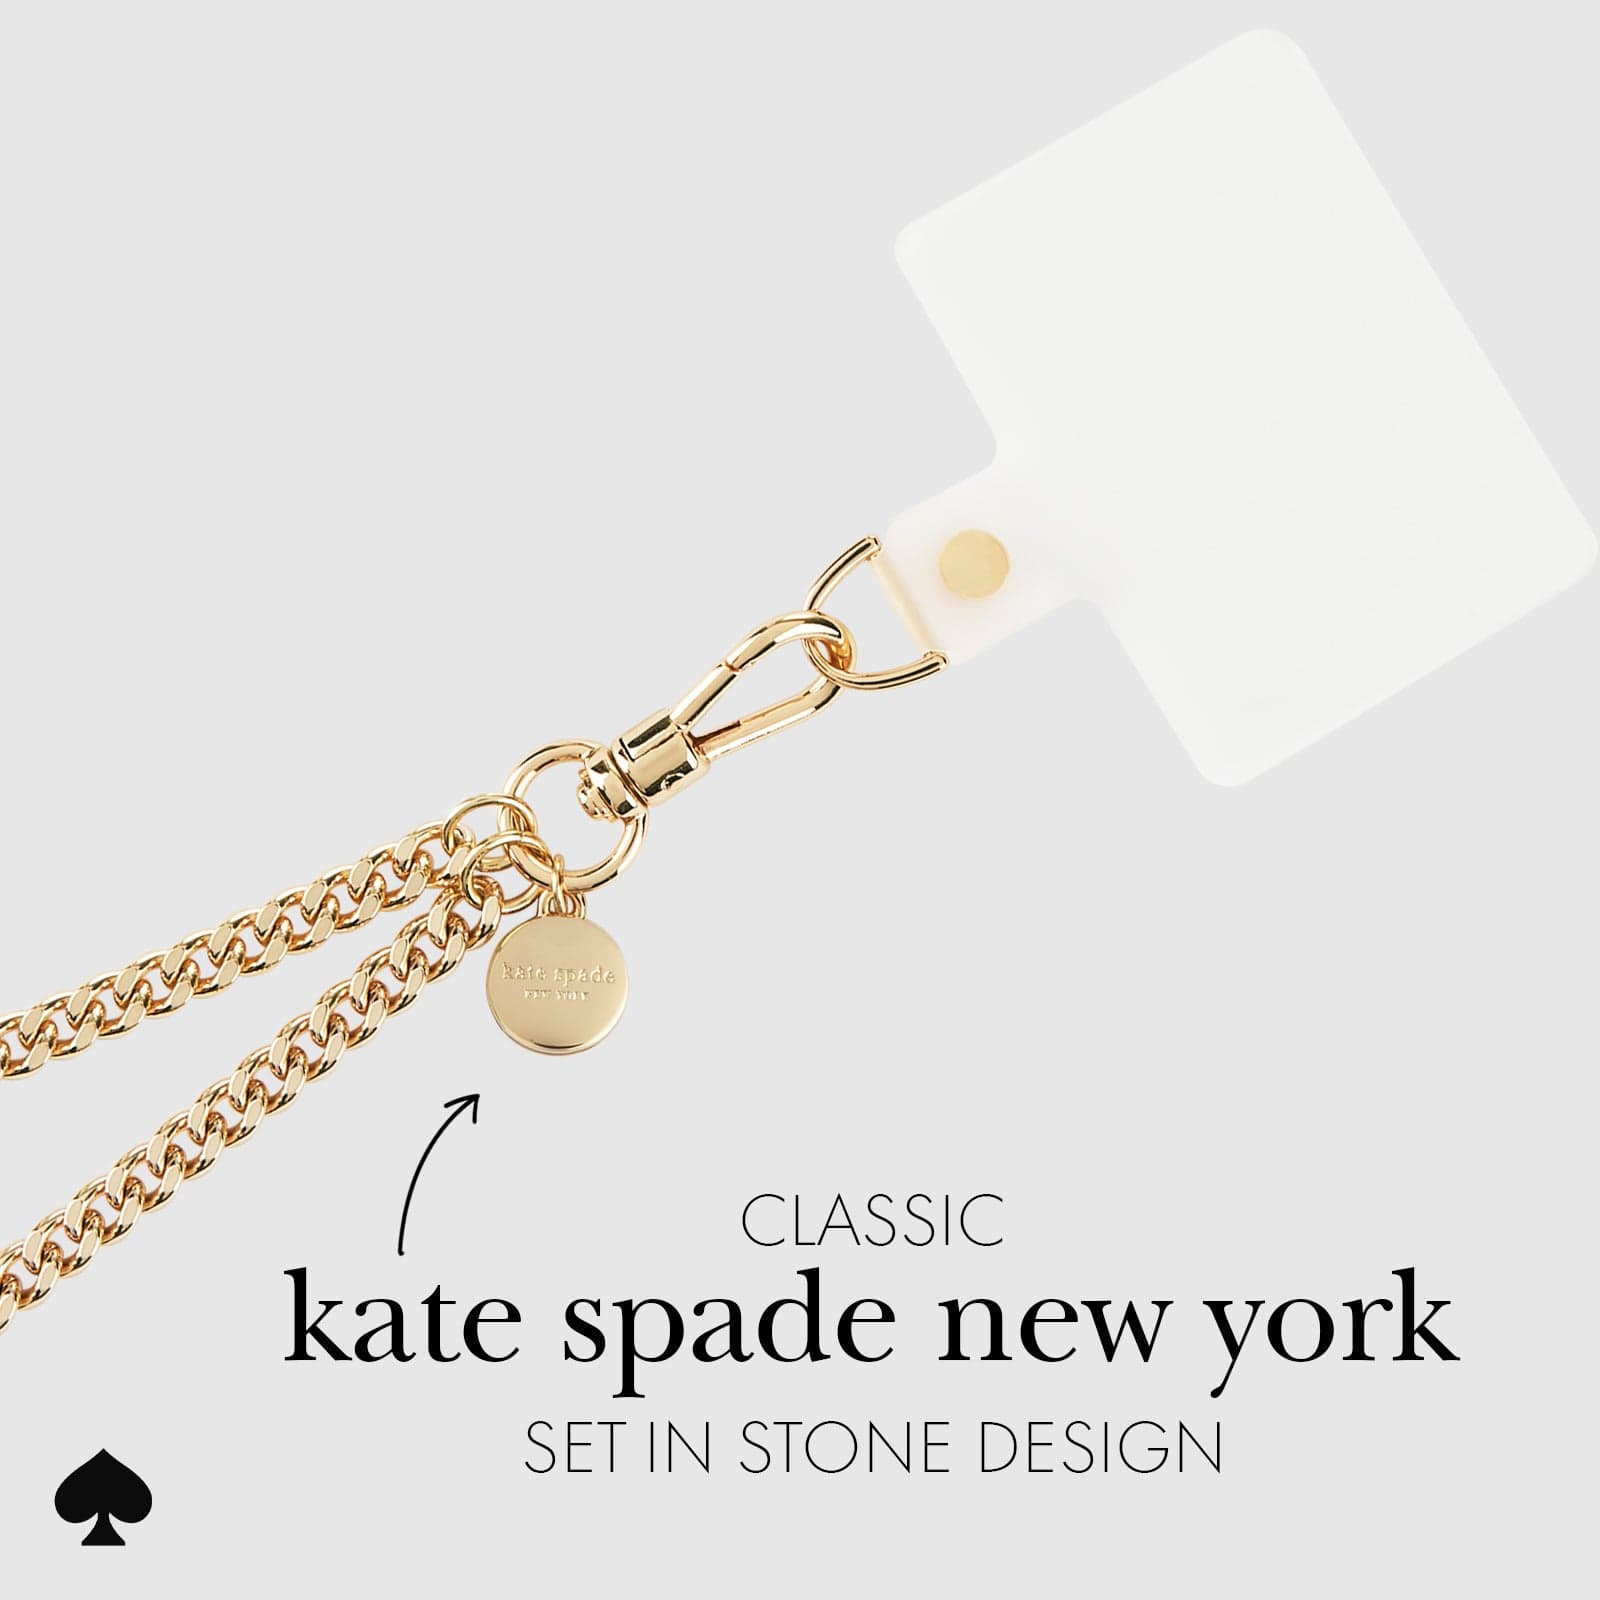 CLASSIC KATE SPADE NEW YORK SET IN STONE DESIGN